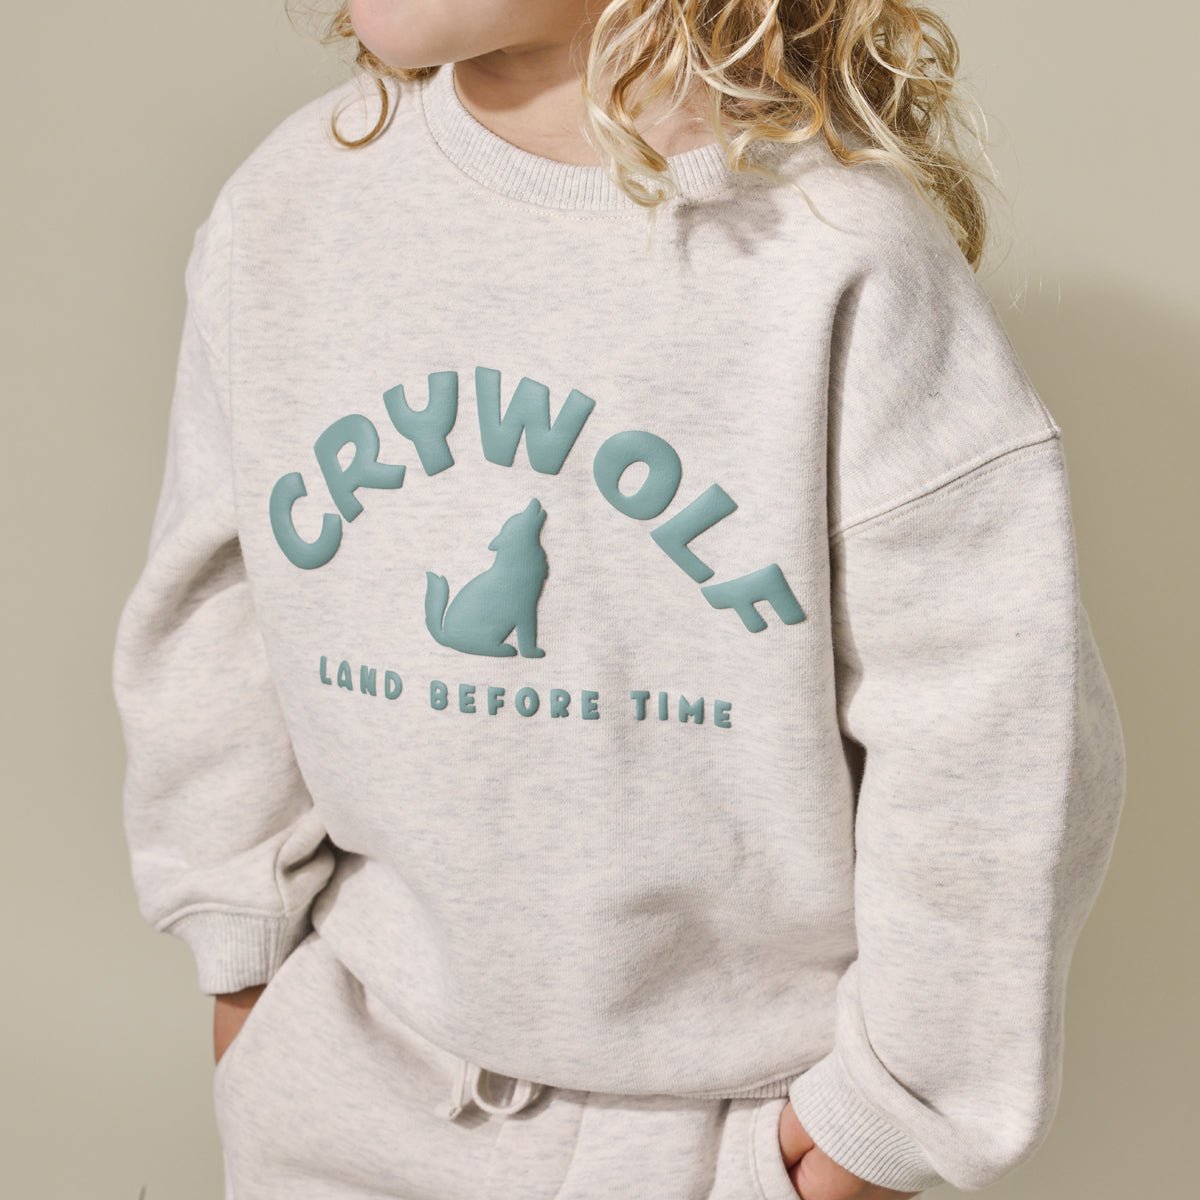 CrywolfJackets|Coats|HoodiesHYPHEN KIDS